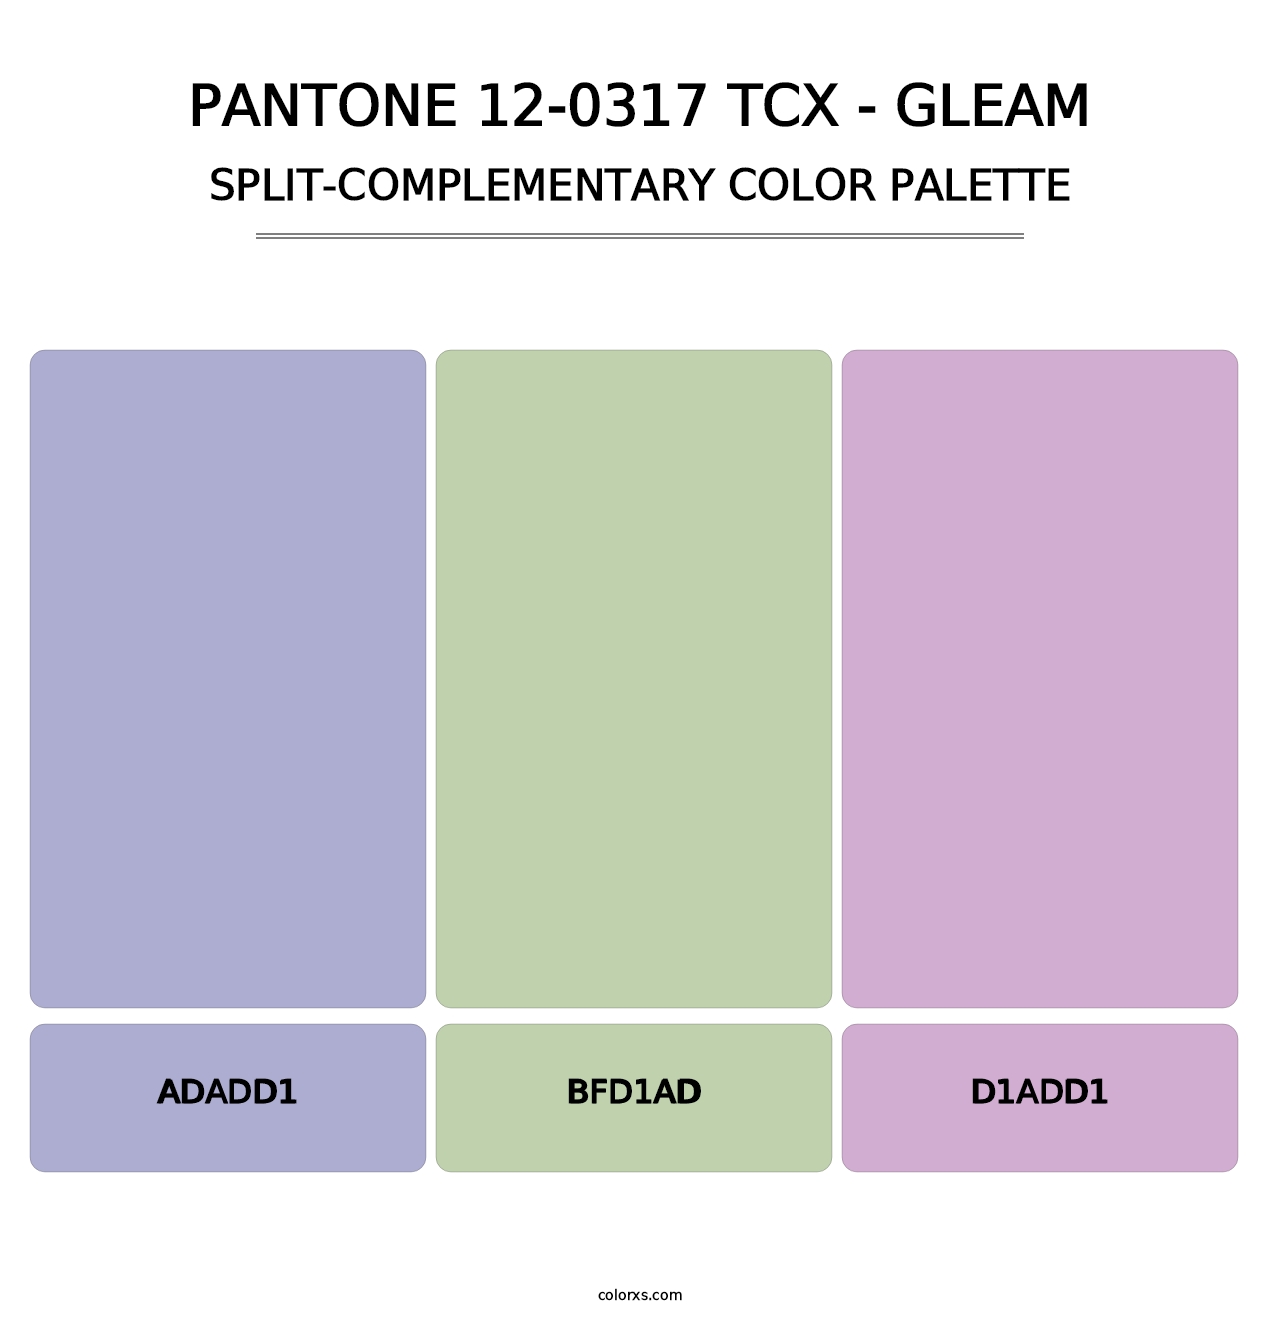 PANTONE 12-0317 TCX - Gleam - Split-Complementary Color Palette